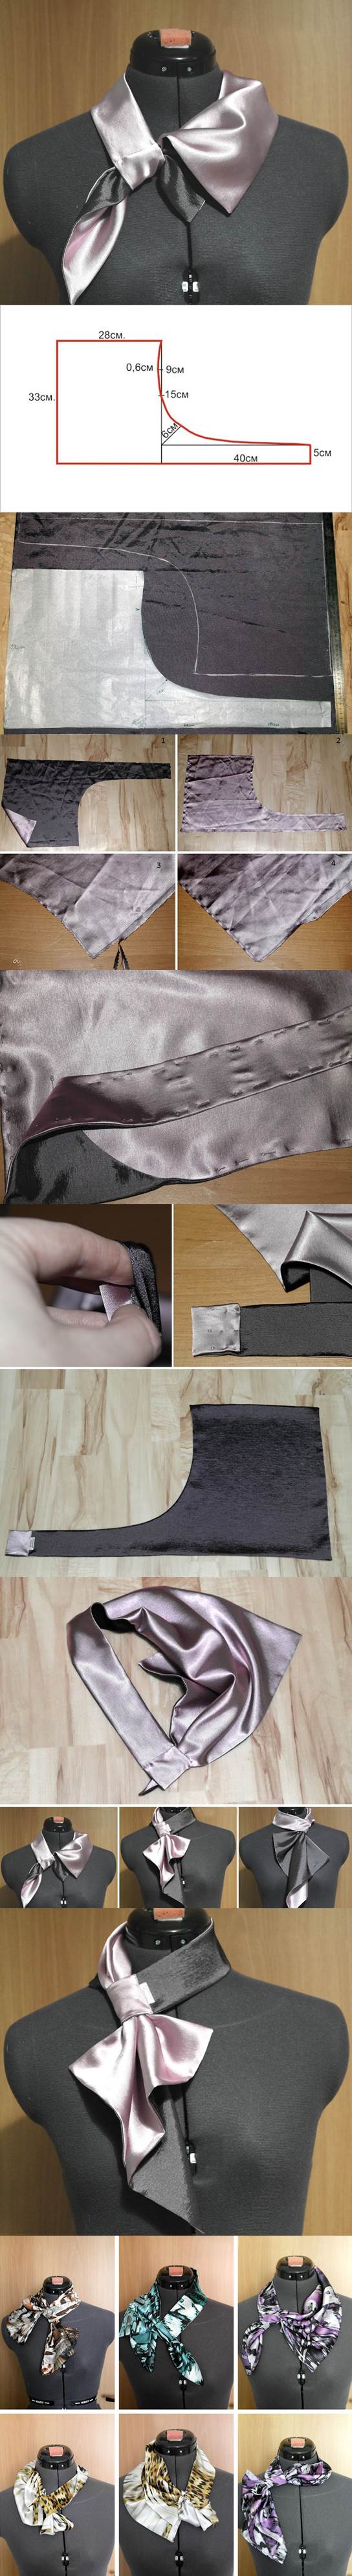 DIY Sewing L-shaped Scarf 2